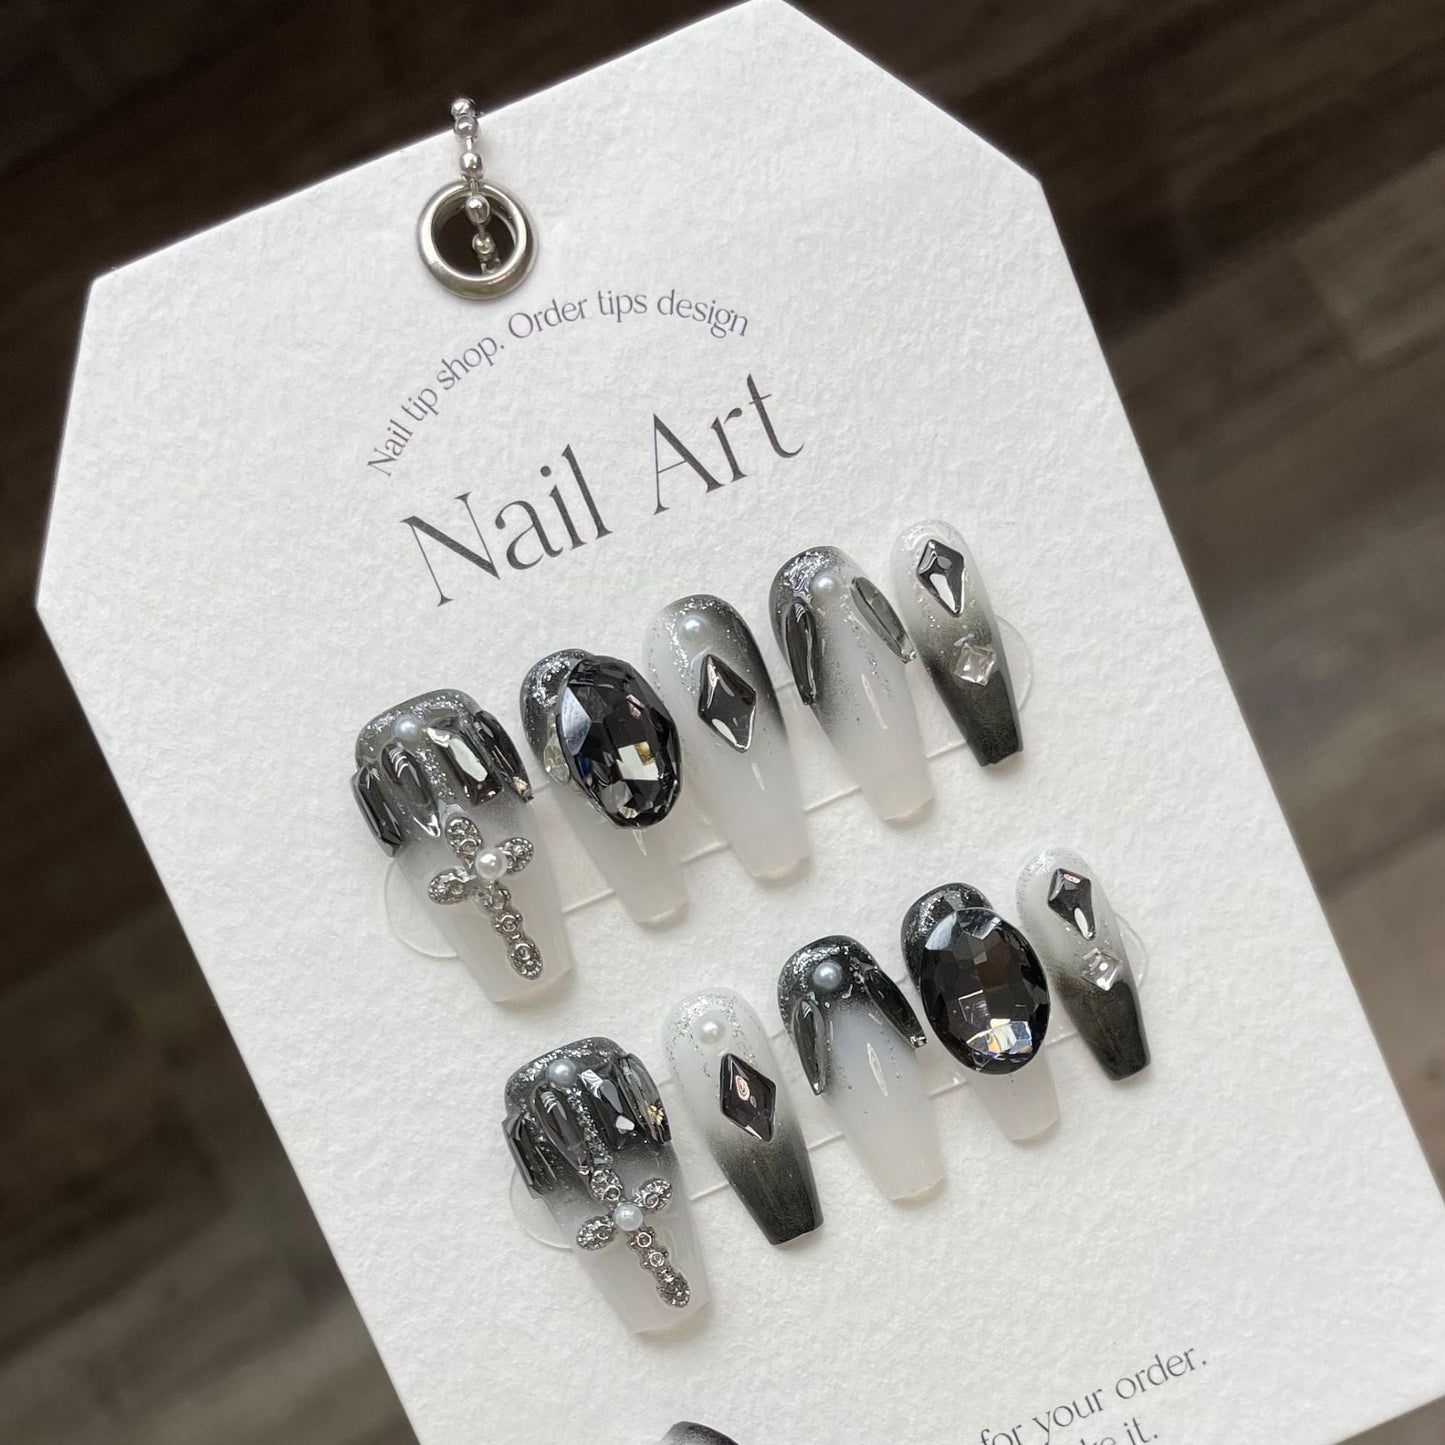 882 black style press on nails 100% handmade false nails black white